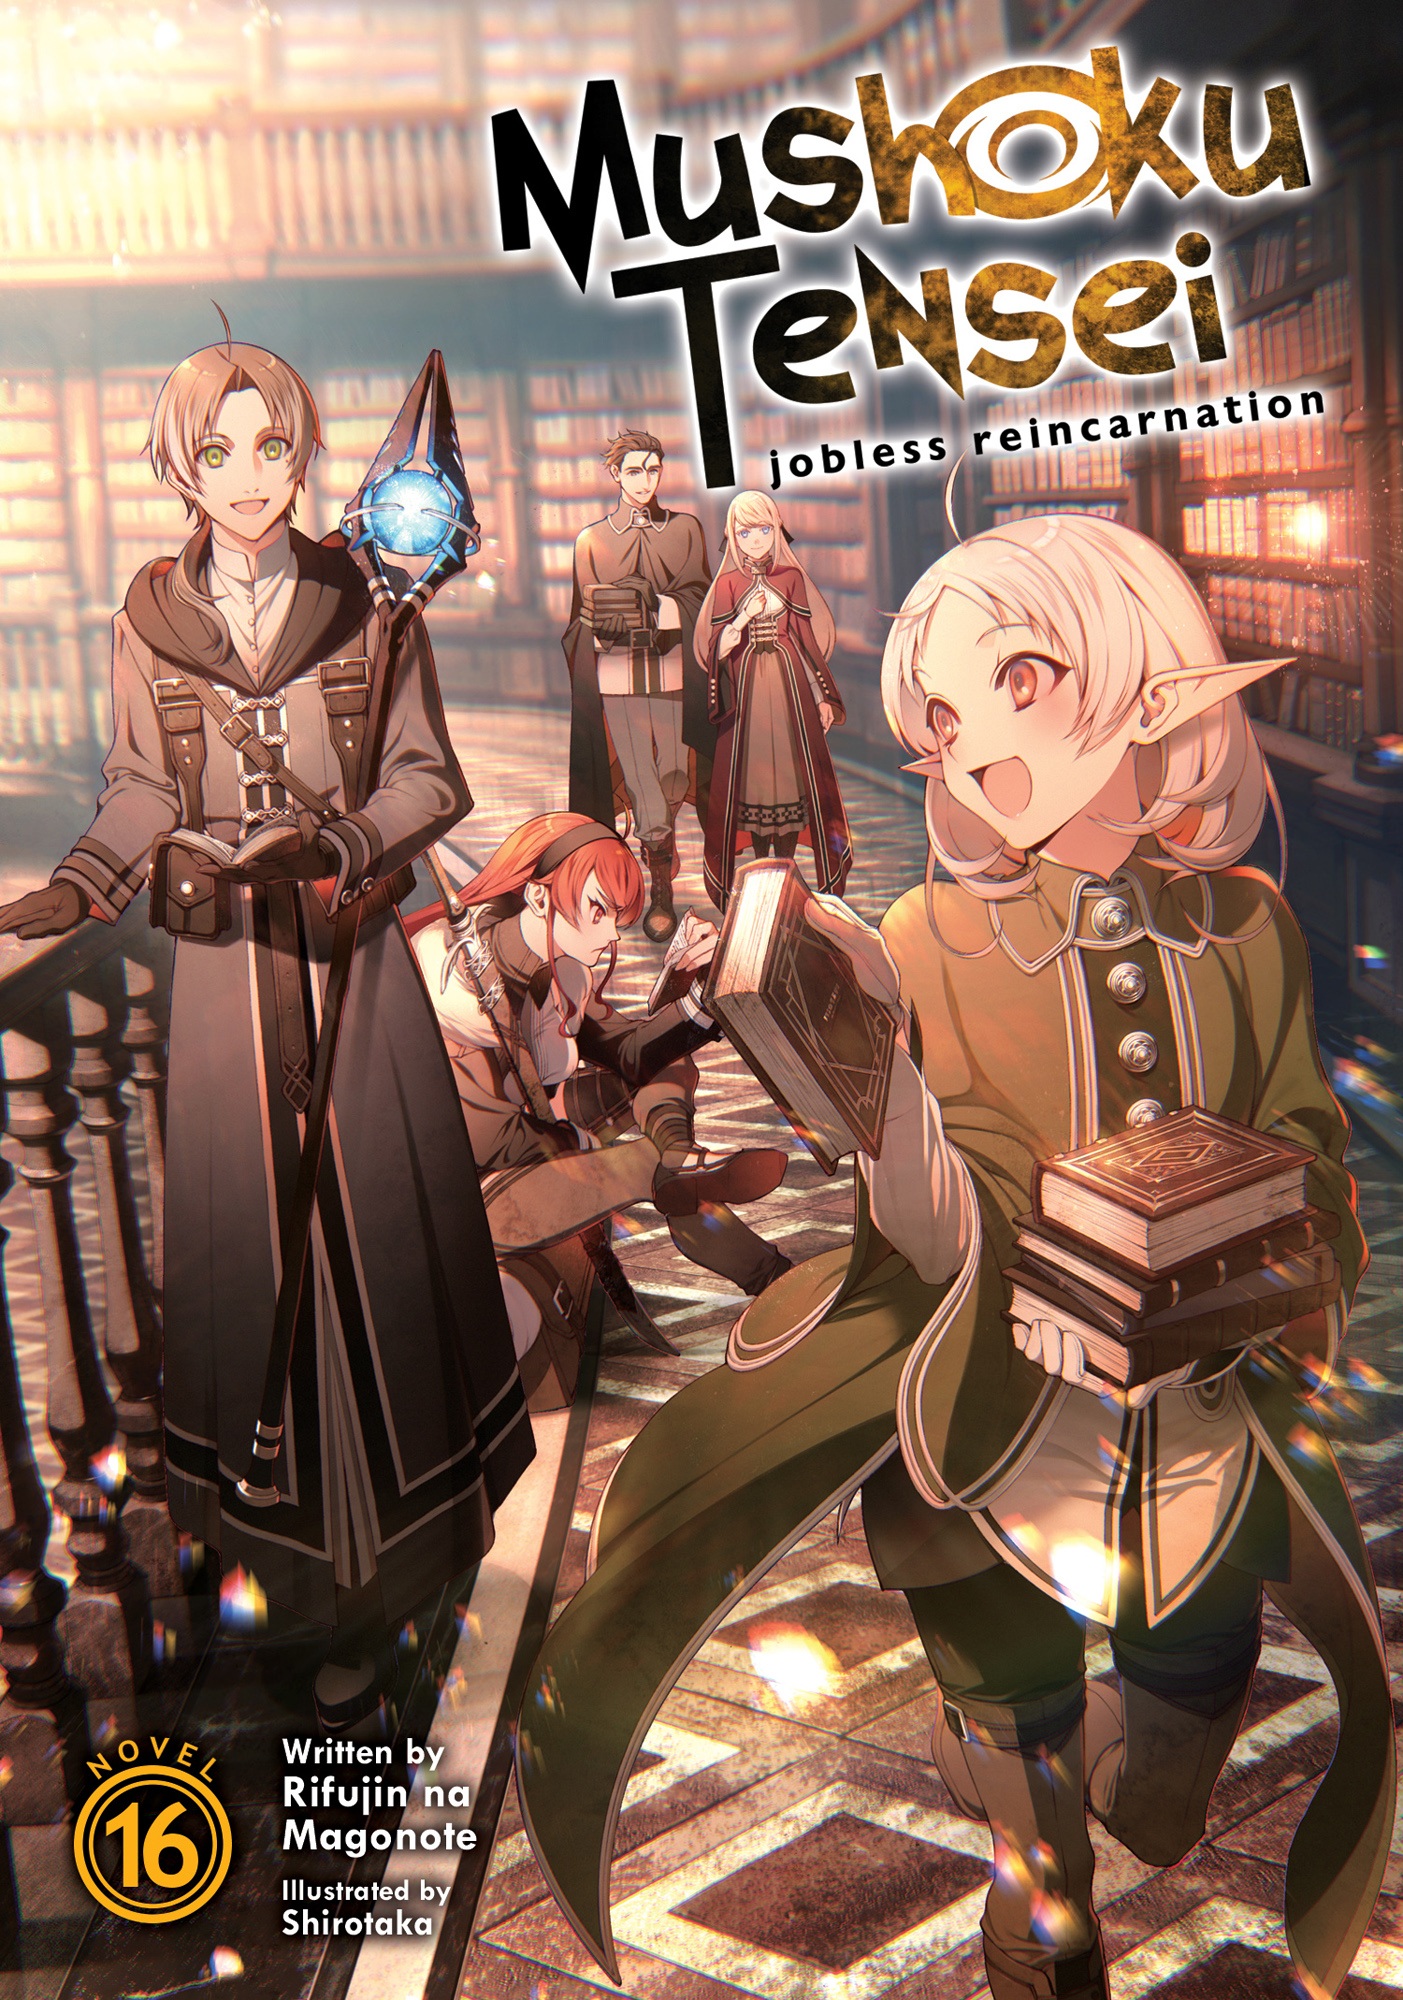 Light Novel & Web Novel Updates Indonesia - ✴UPDATE✴ Tensei